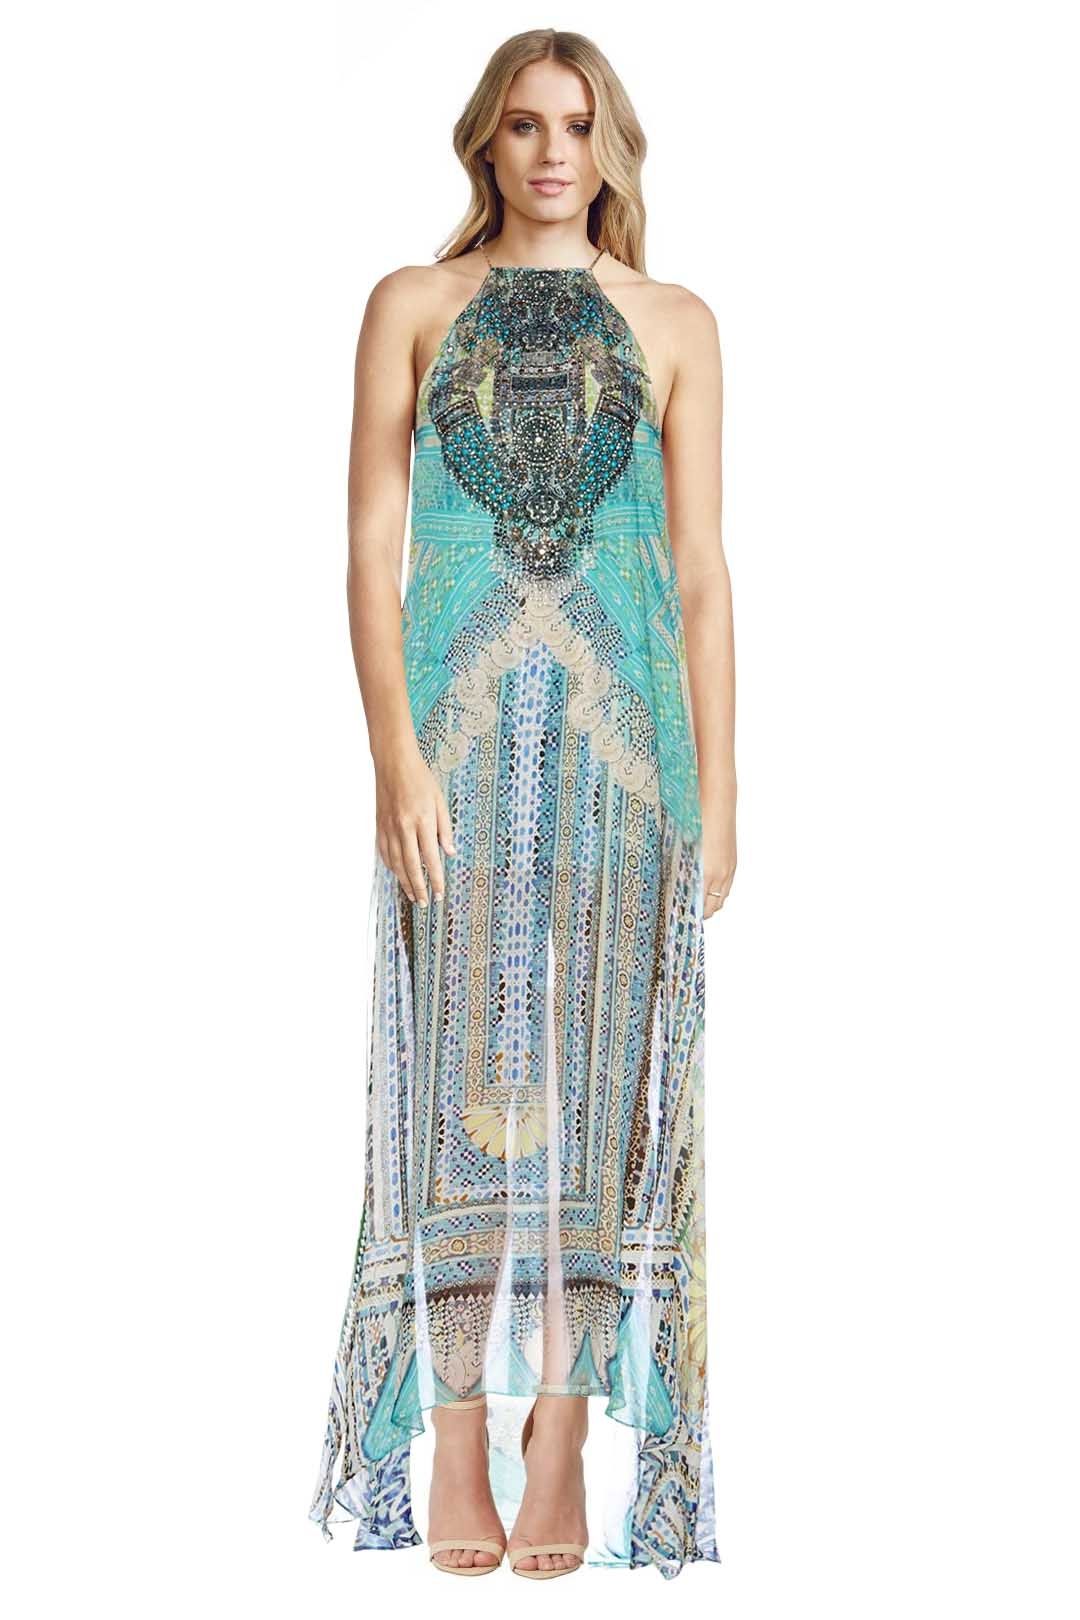 Camilla - Topkapi Thread Sheer Overlay Dress - Prints - Front